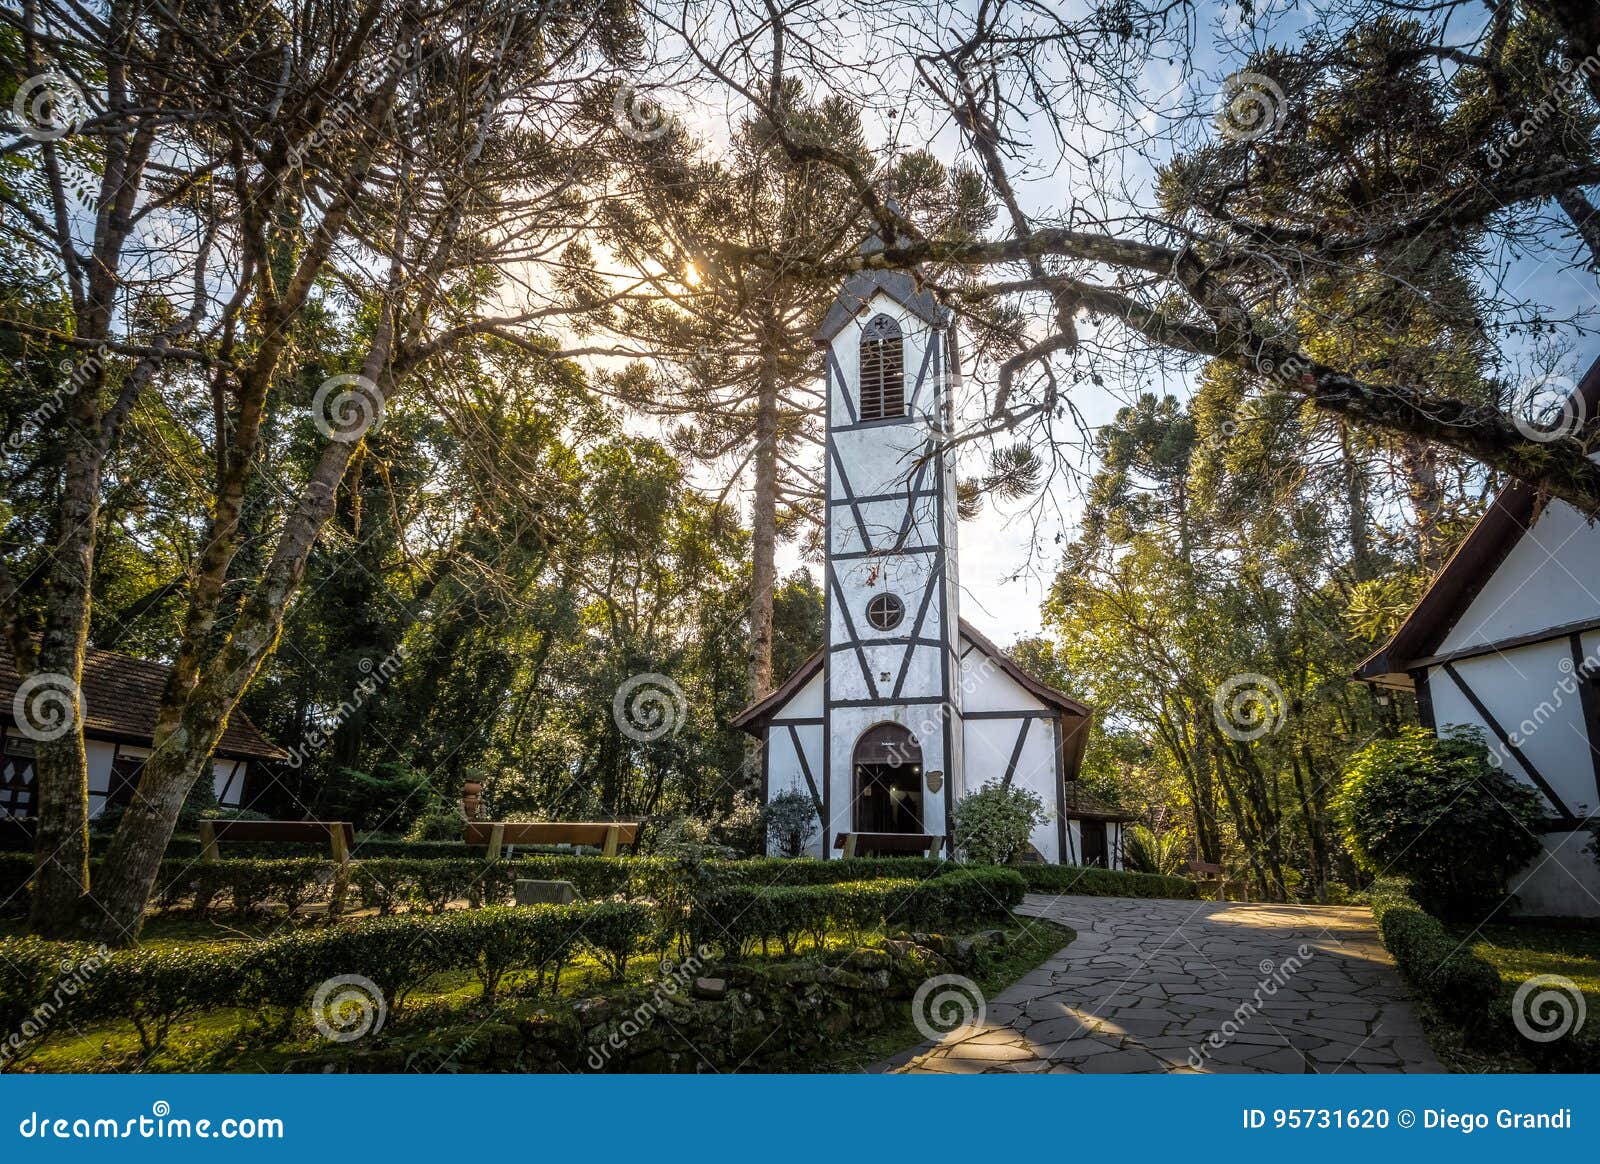 church and houses at immigrant village park & x28;parque aldeia do imigrante& x29; - nova petropolis, rio grande do sul, brazil